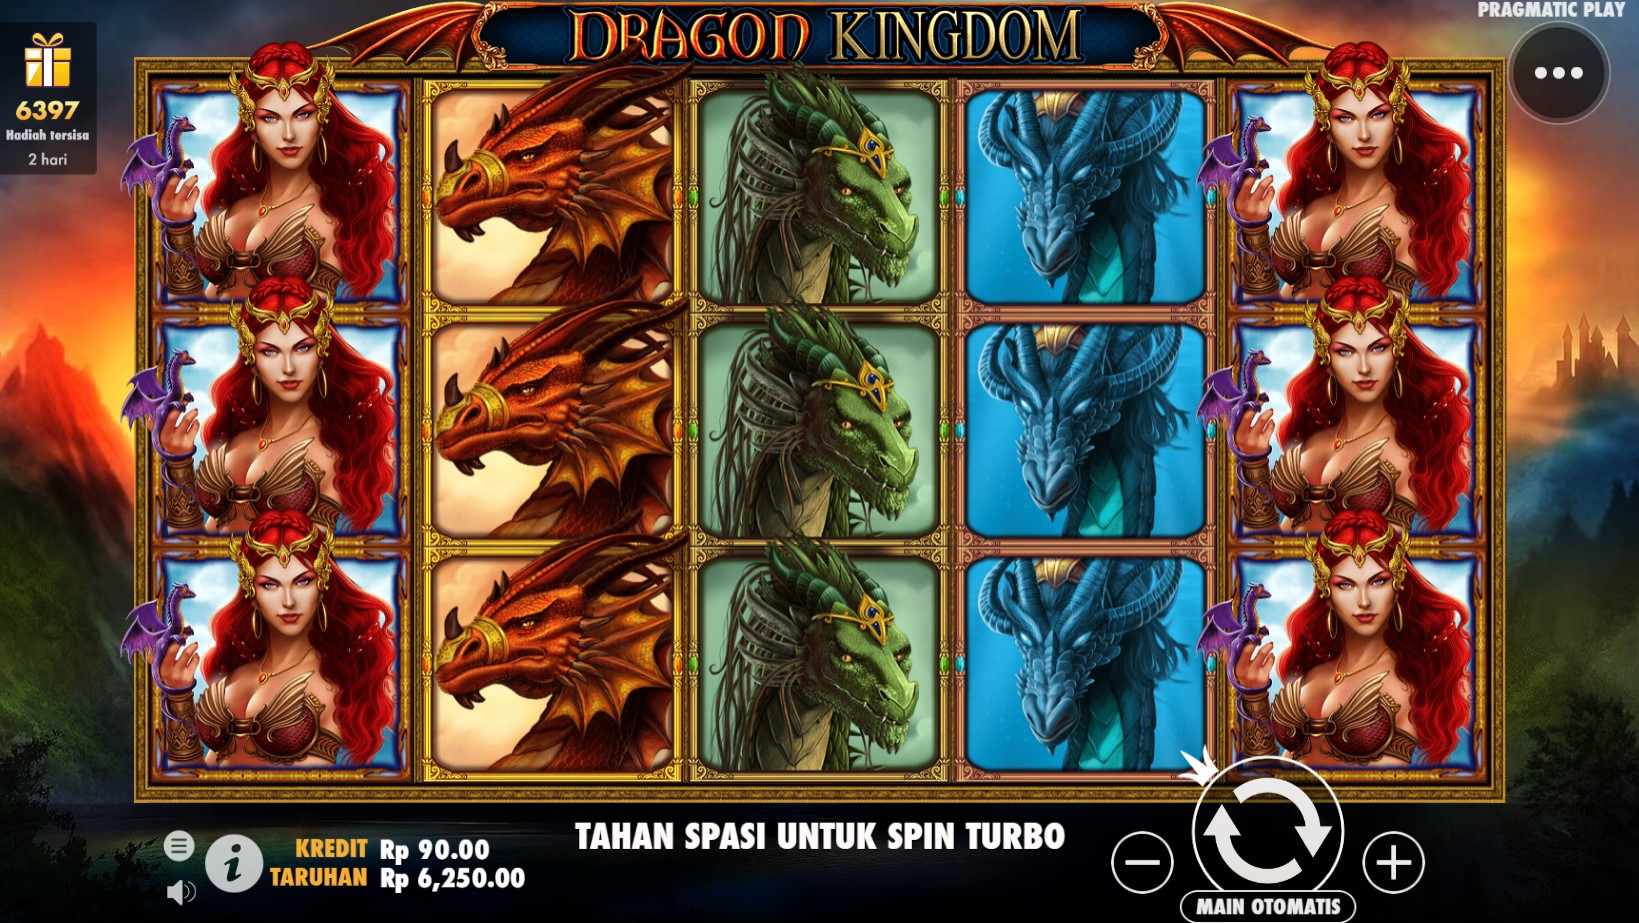 Menguasai Kerajaan Naga Panduan Menang Bermain Dragon Kingdom Pragmatic Play